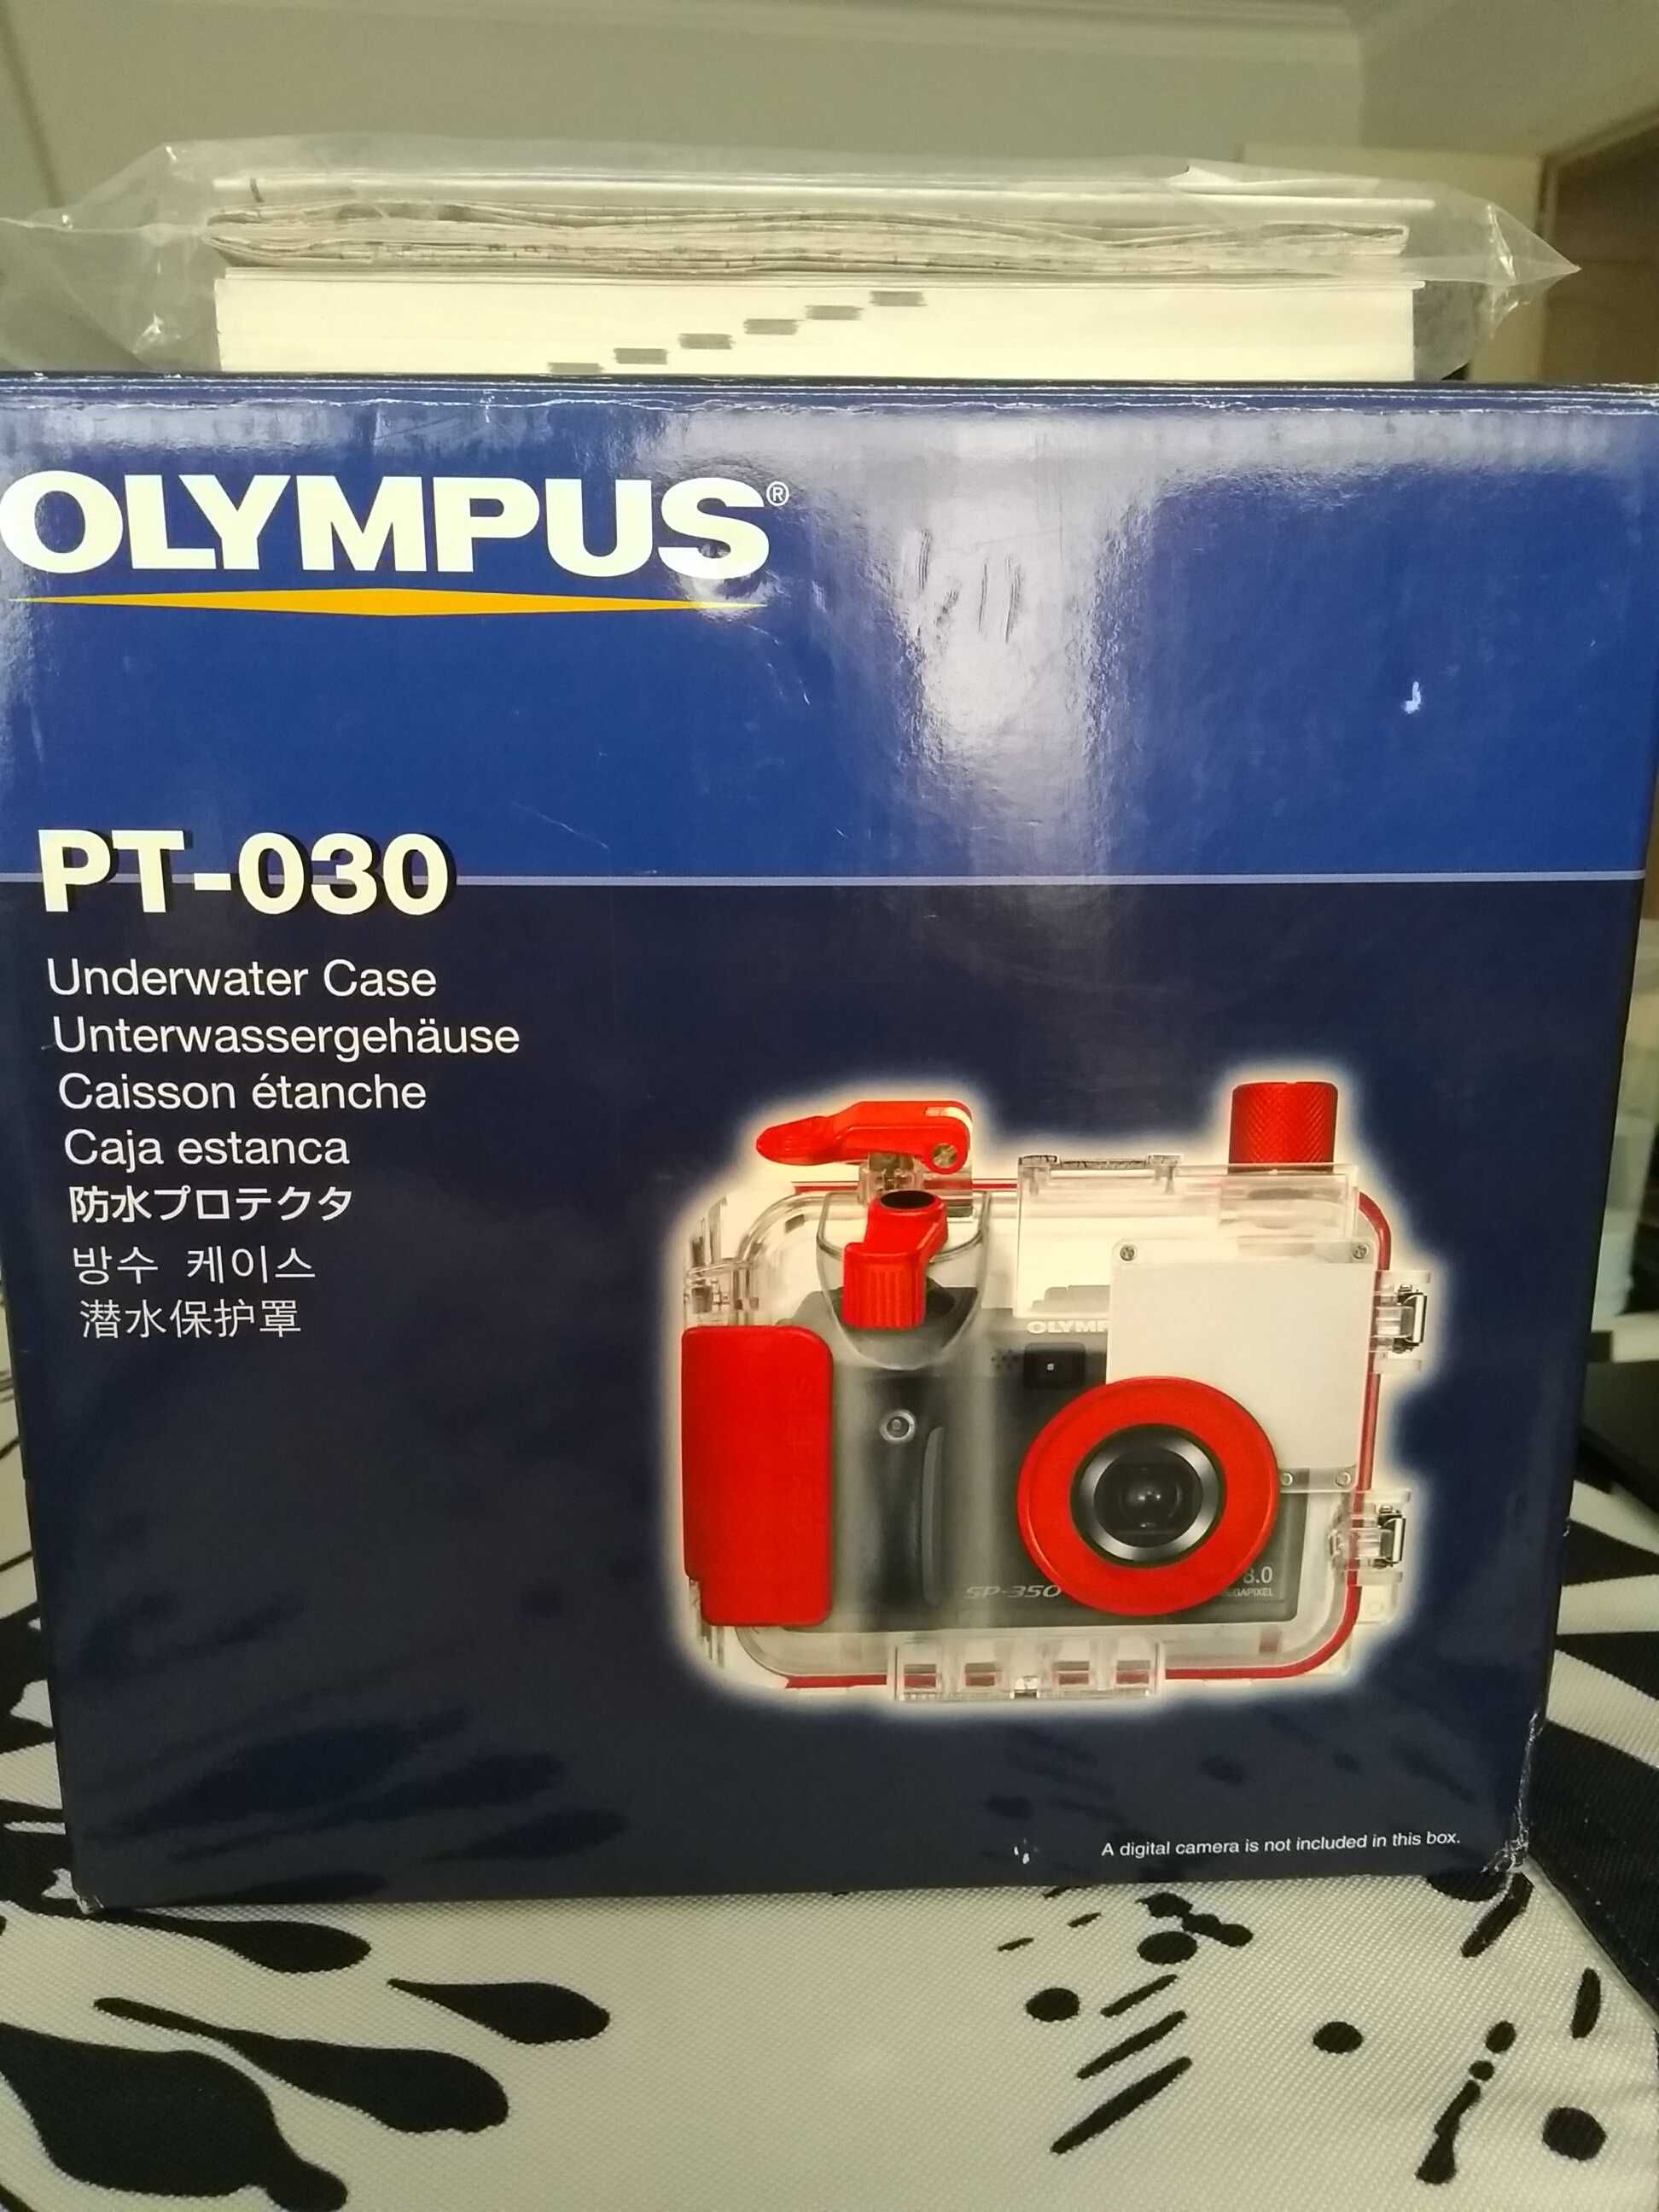 Caixa máquina fotográfica à prova de água - Olympus PT-030